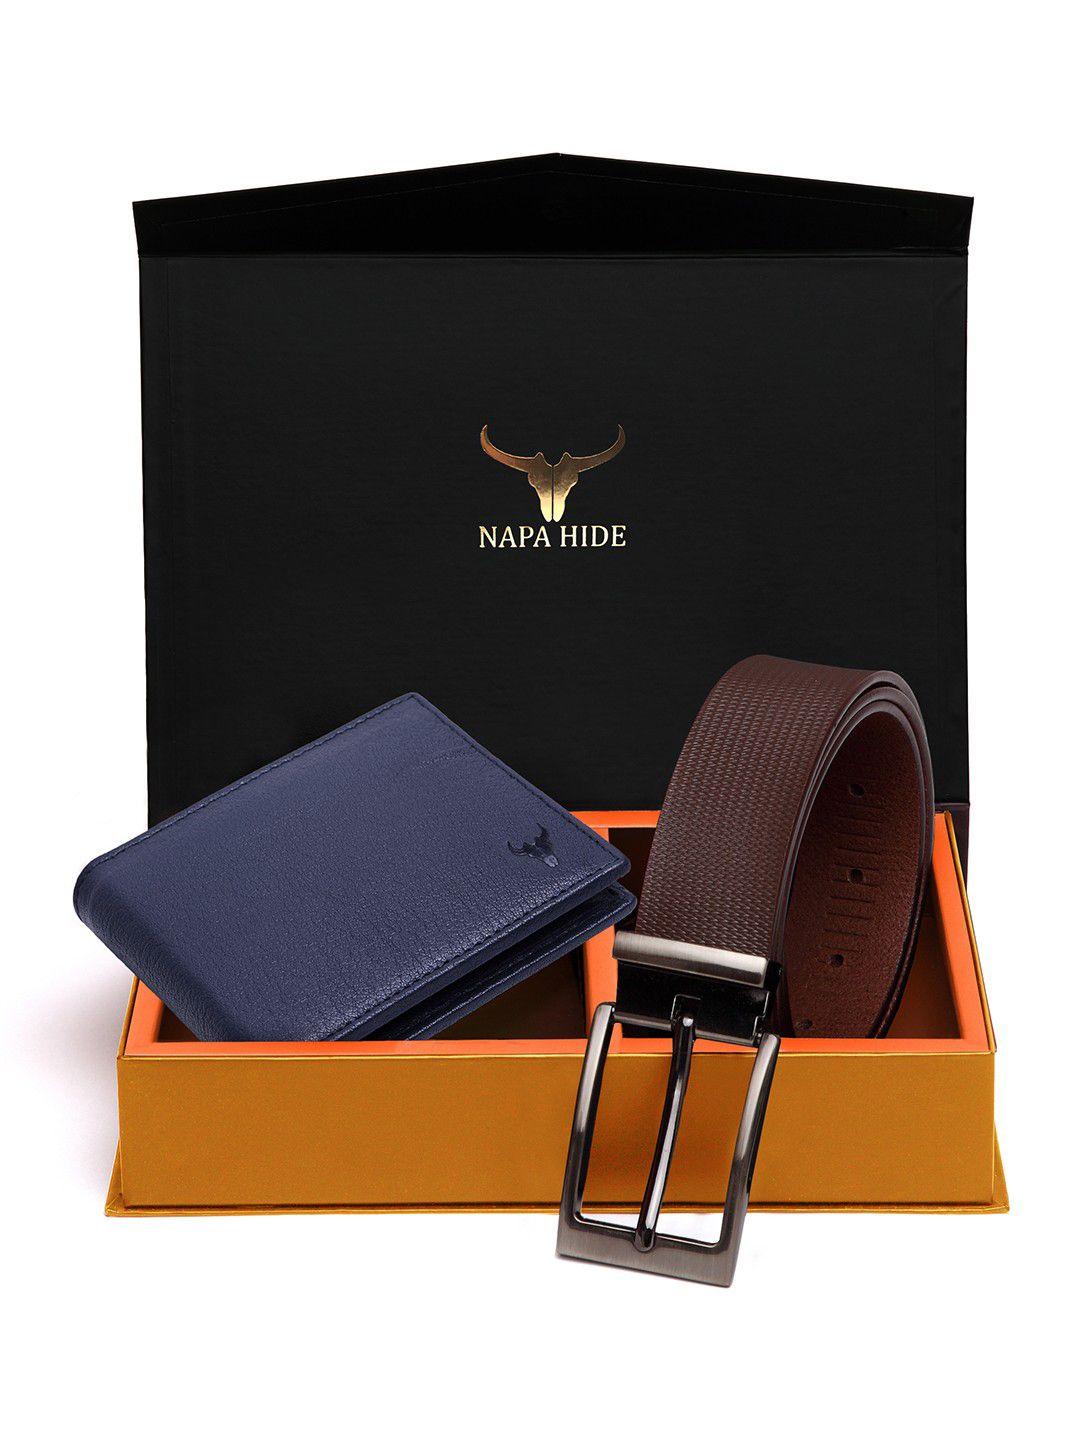 napa hide men rfid protected genuine leather wallet & belt accessory gift set